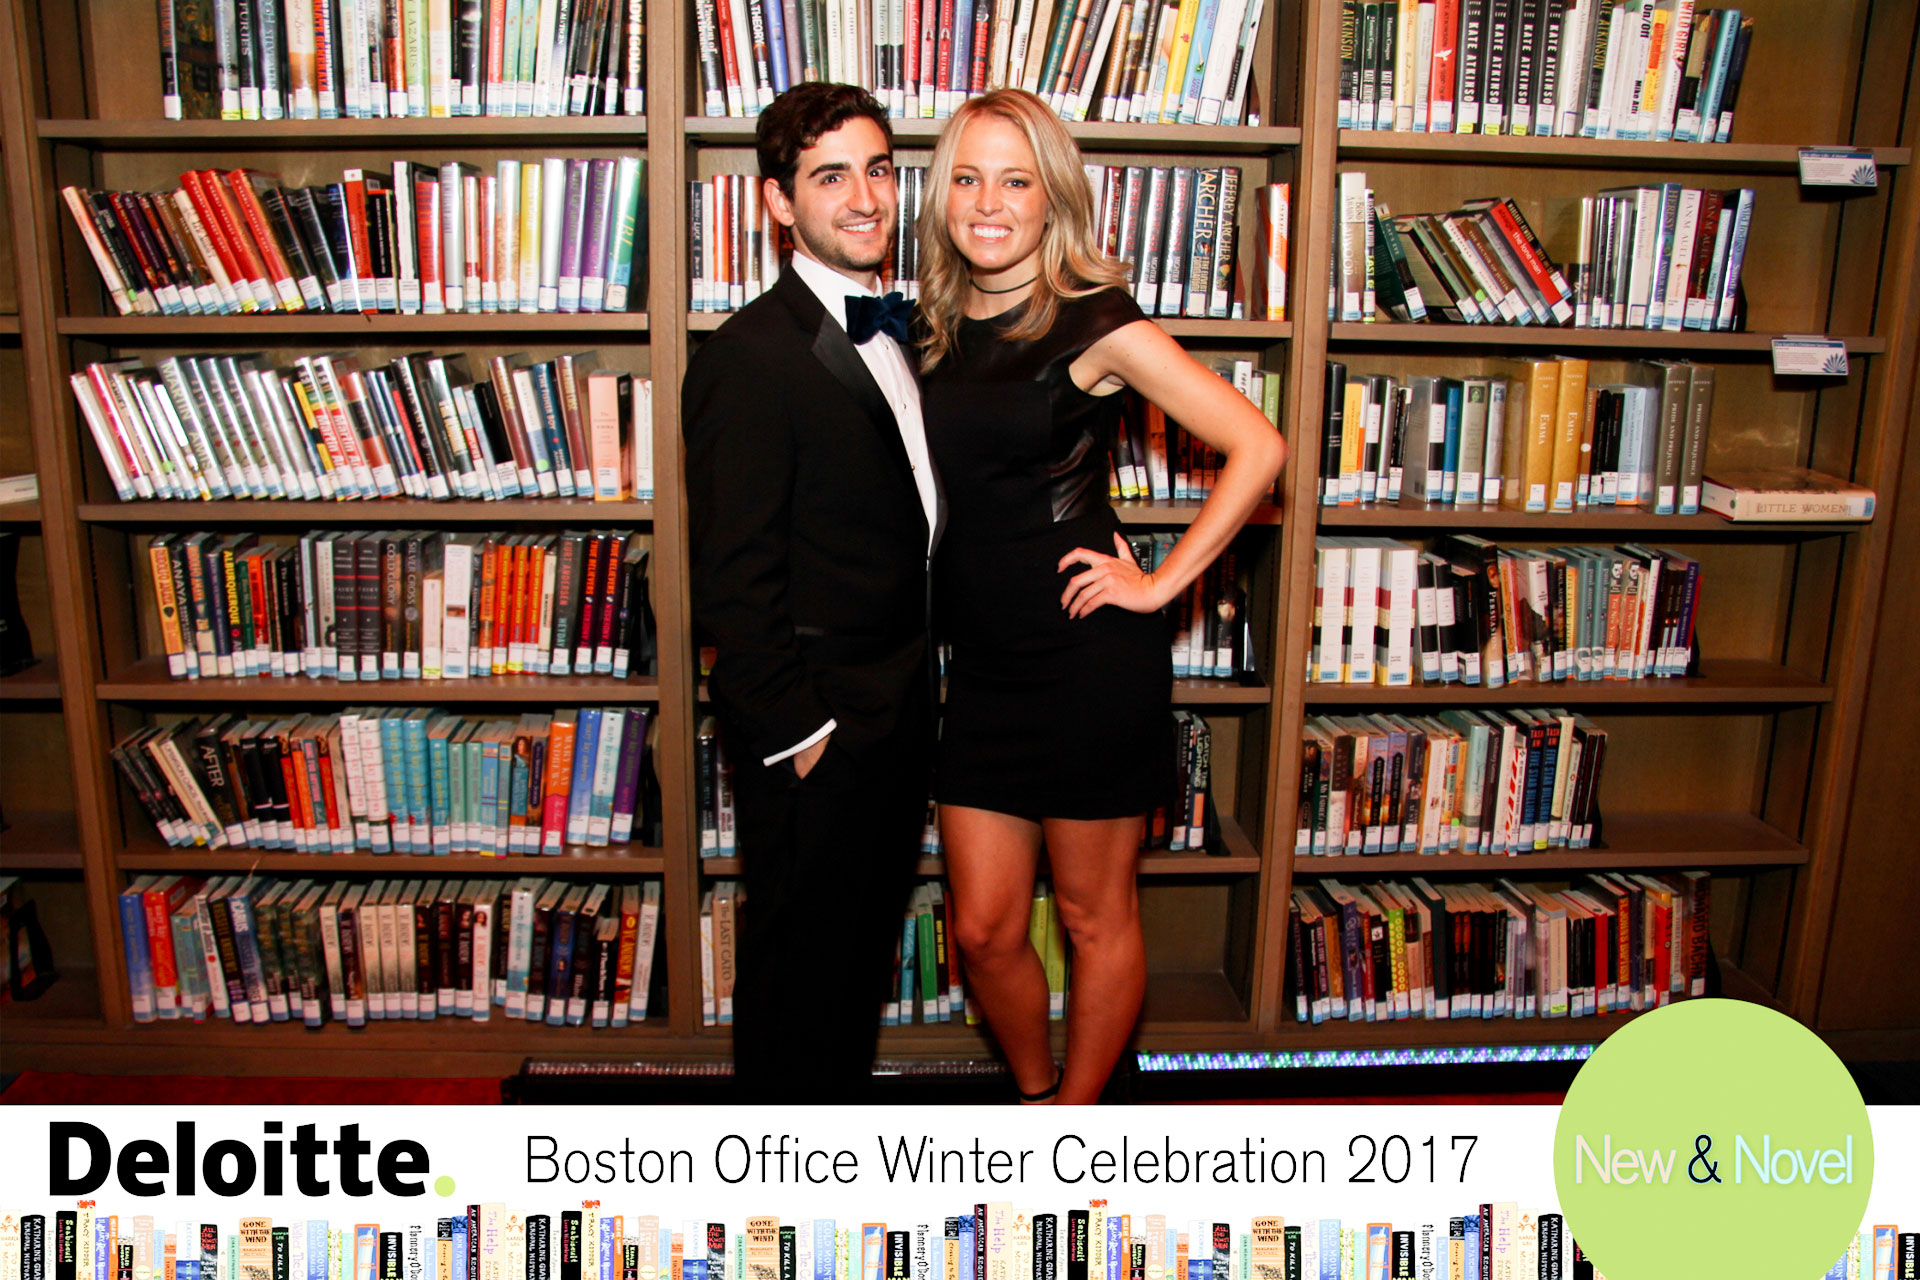 Deloitte Photo Station at Boston Public Library 5x7 Print of Couple